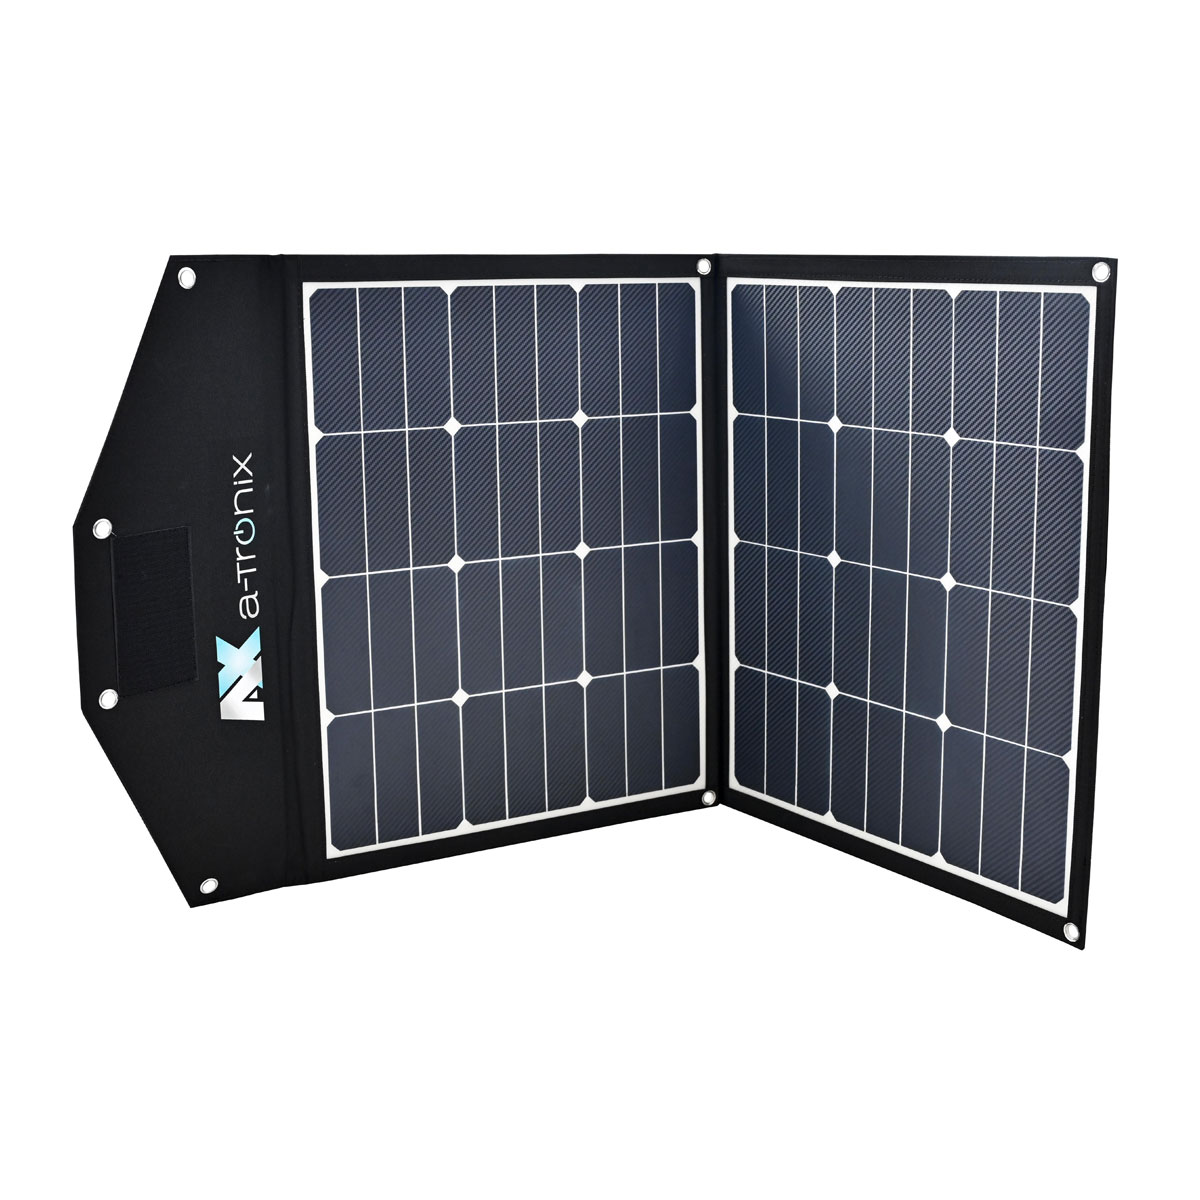 Mobile Solarpanele günstig kaufen